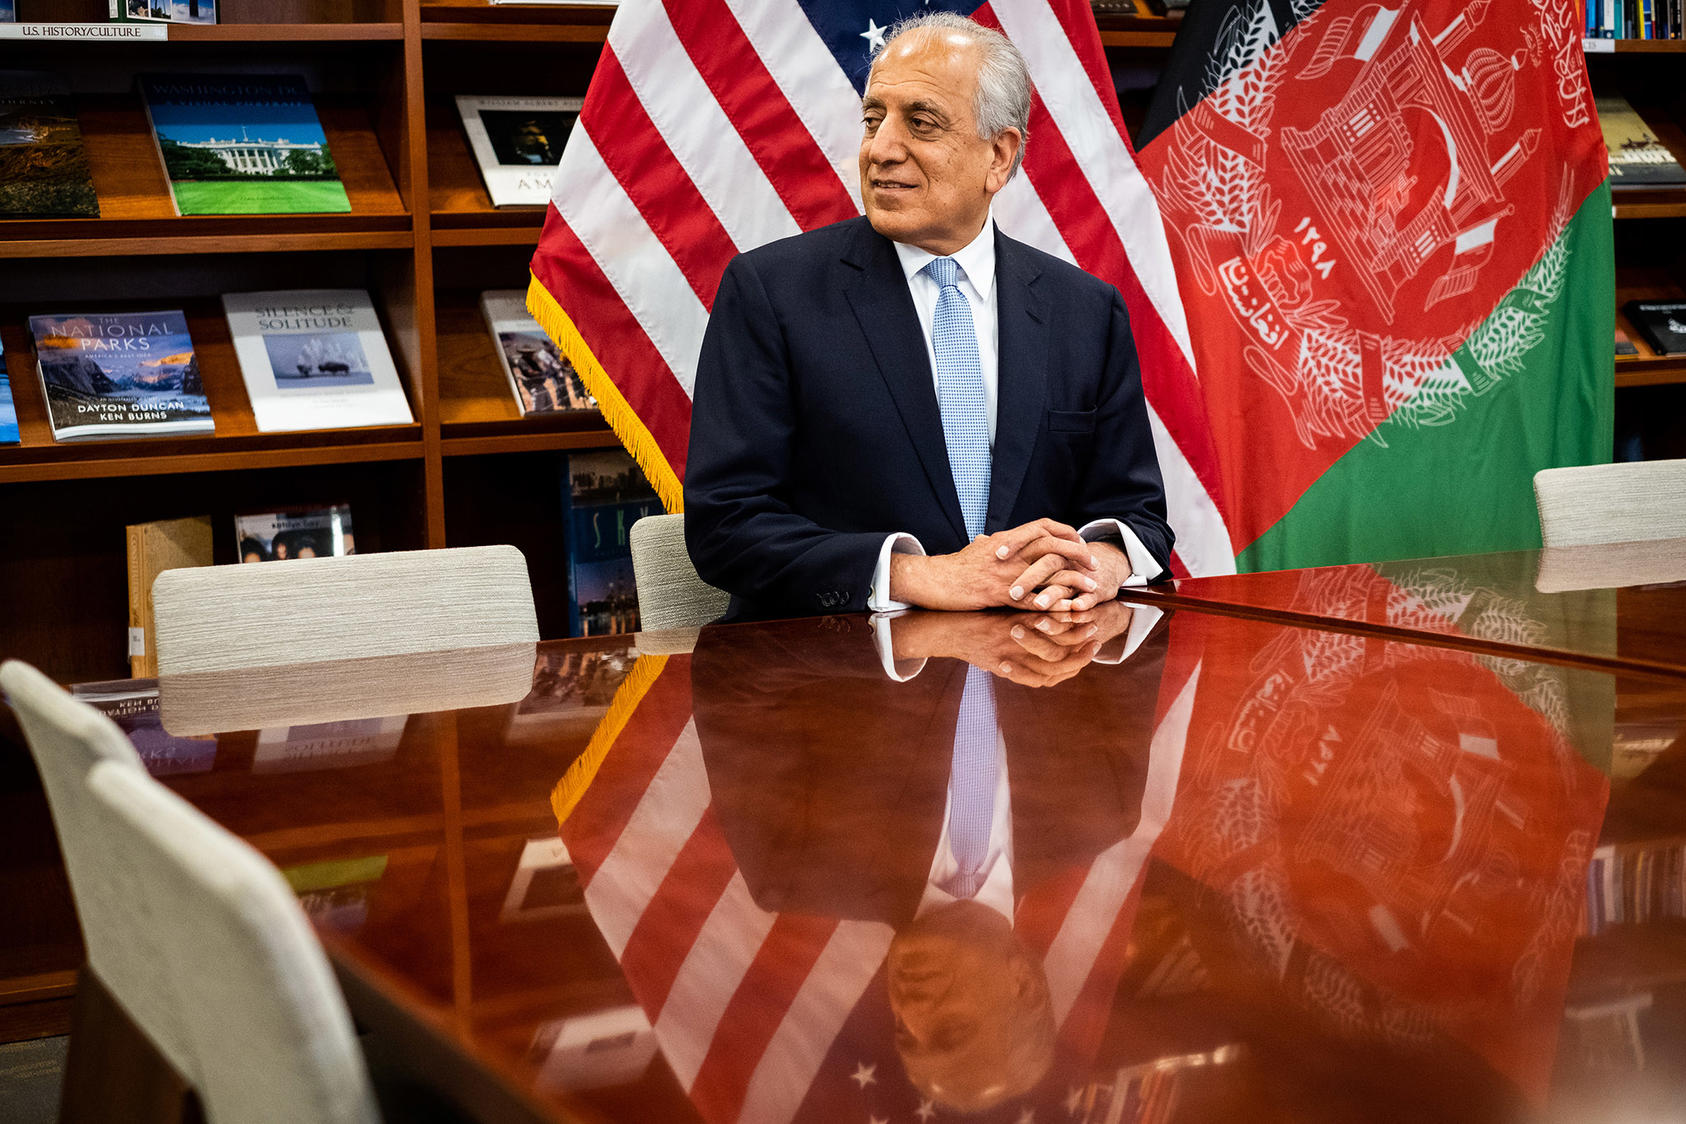 Zalmay Khalilzad at the United States Embassy in Kabul, Afghanistan on Jan. 28, 2018. (Jim Huylebroek/The New York Times)